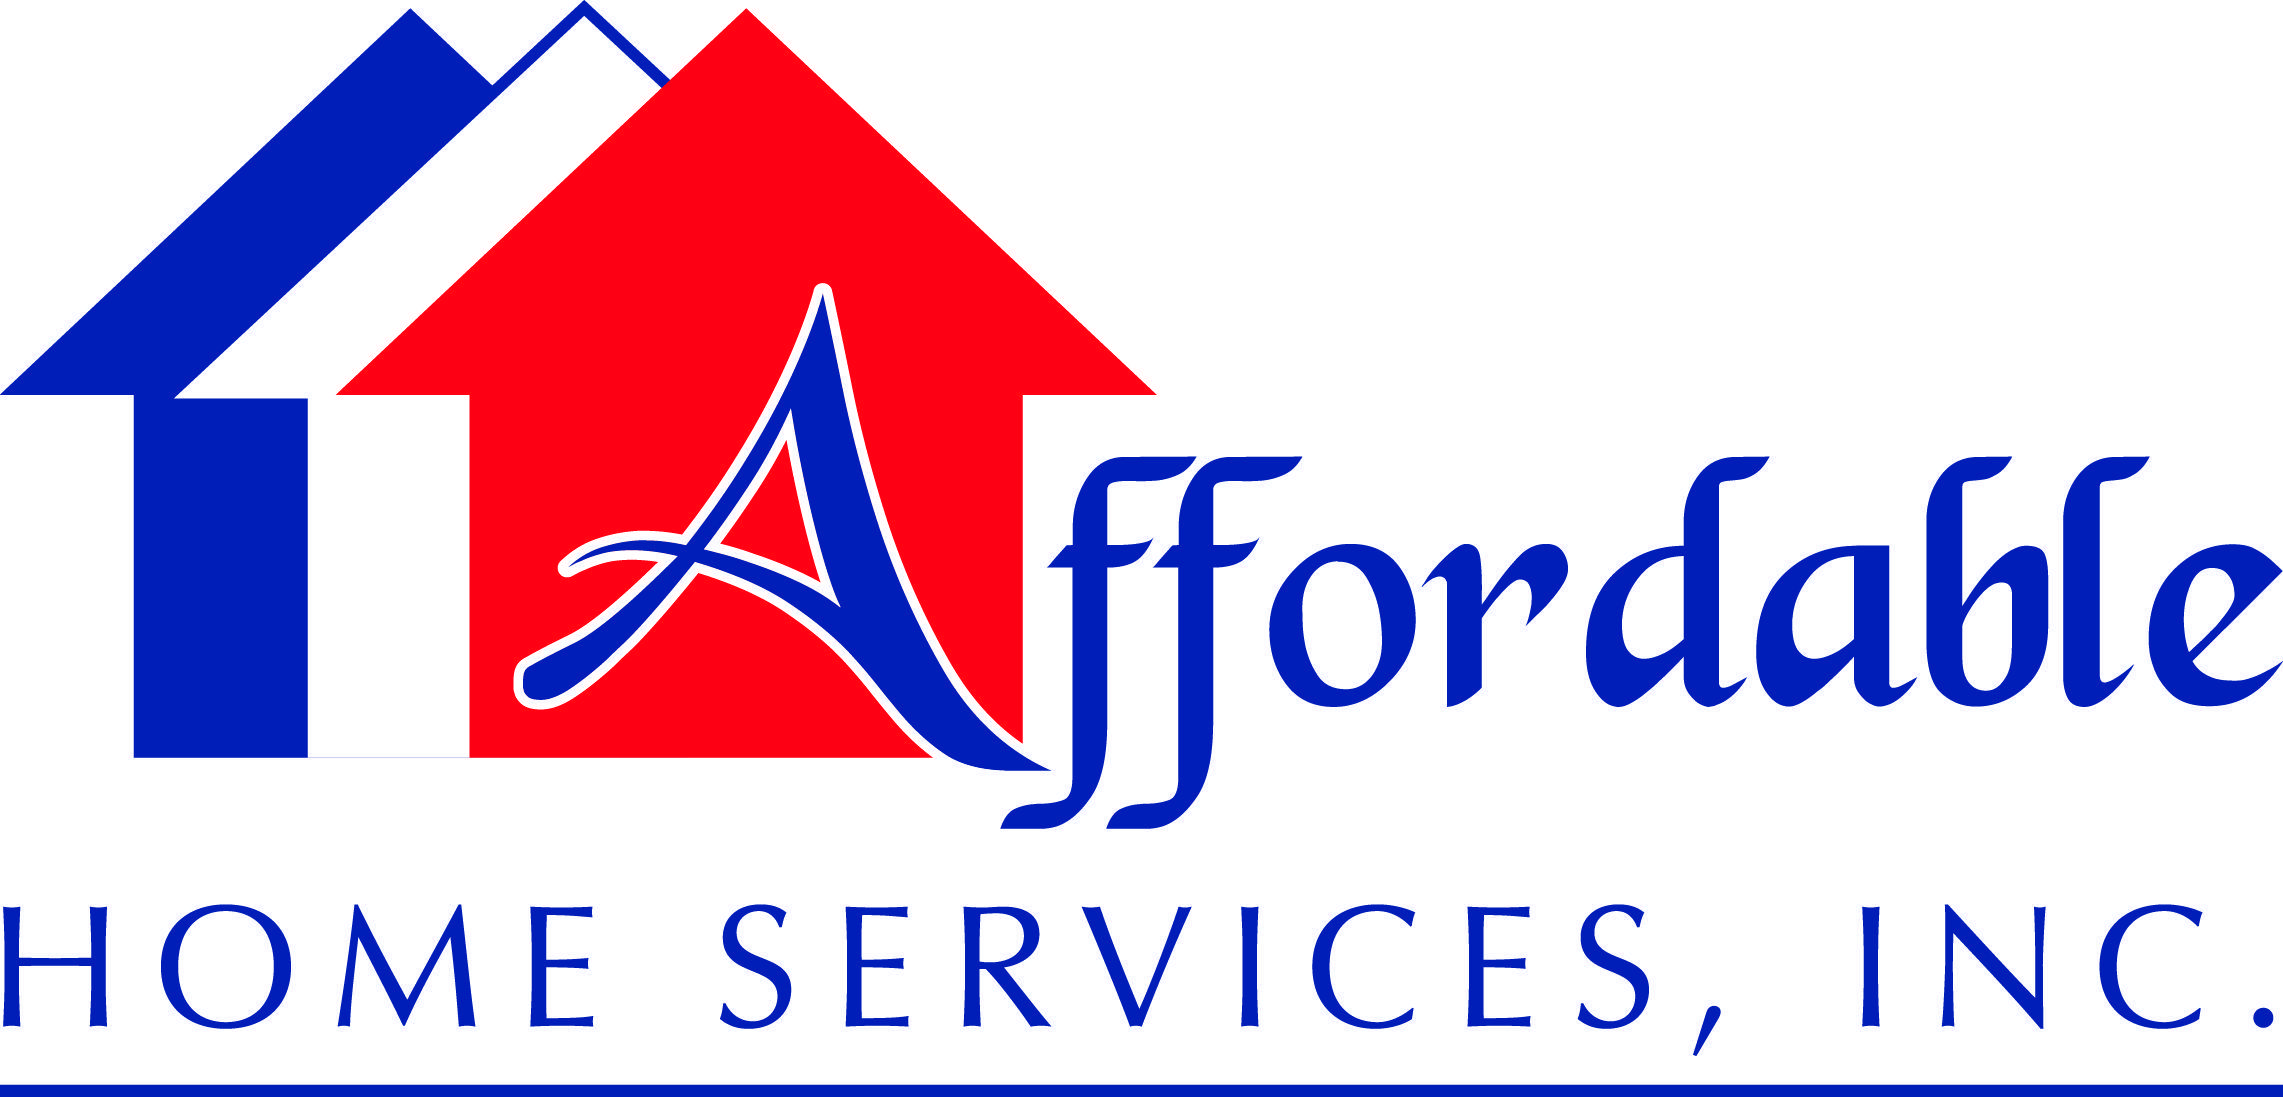 Red and Blue Services Logo - Affordable Home Services - Mount Juliet Logo Design | DLS Graphics